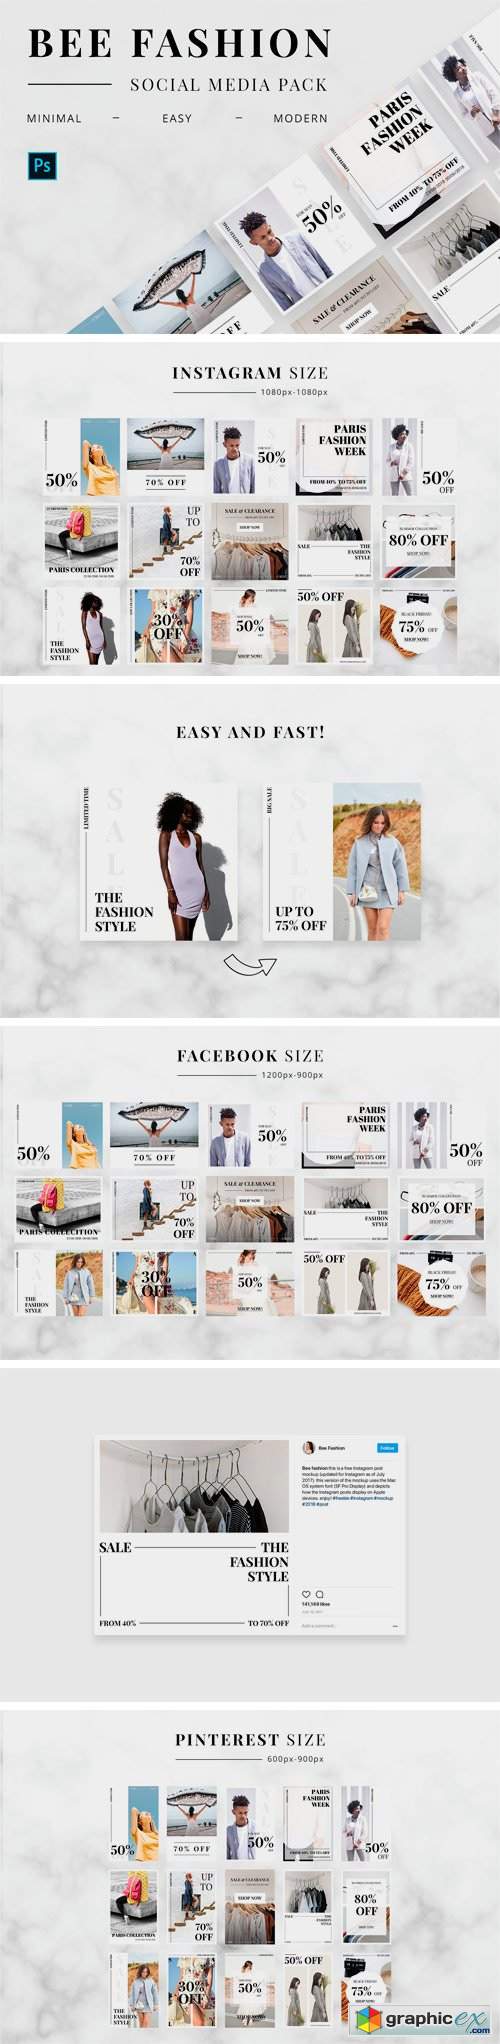 Bee Fashion Social Media Pack